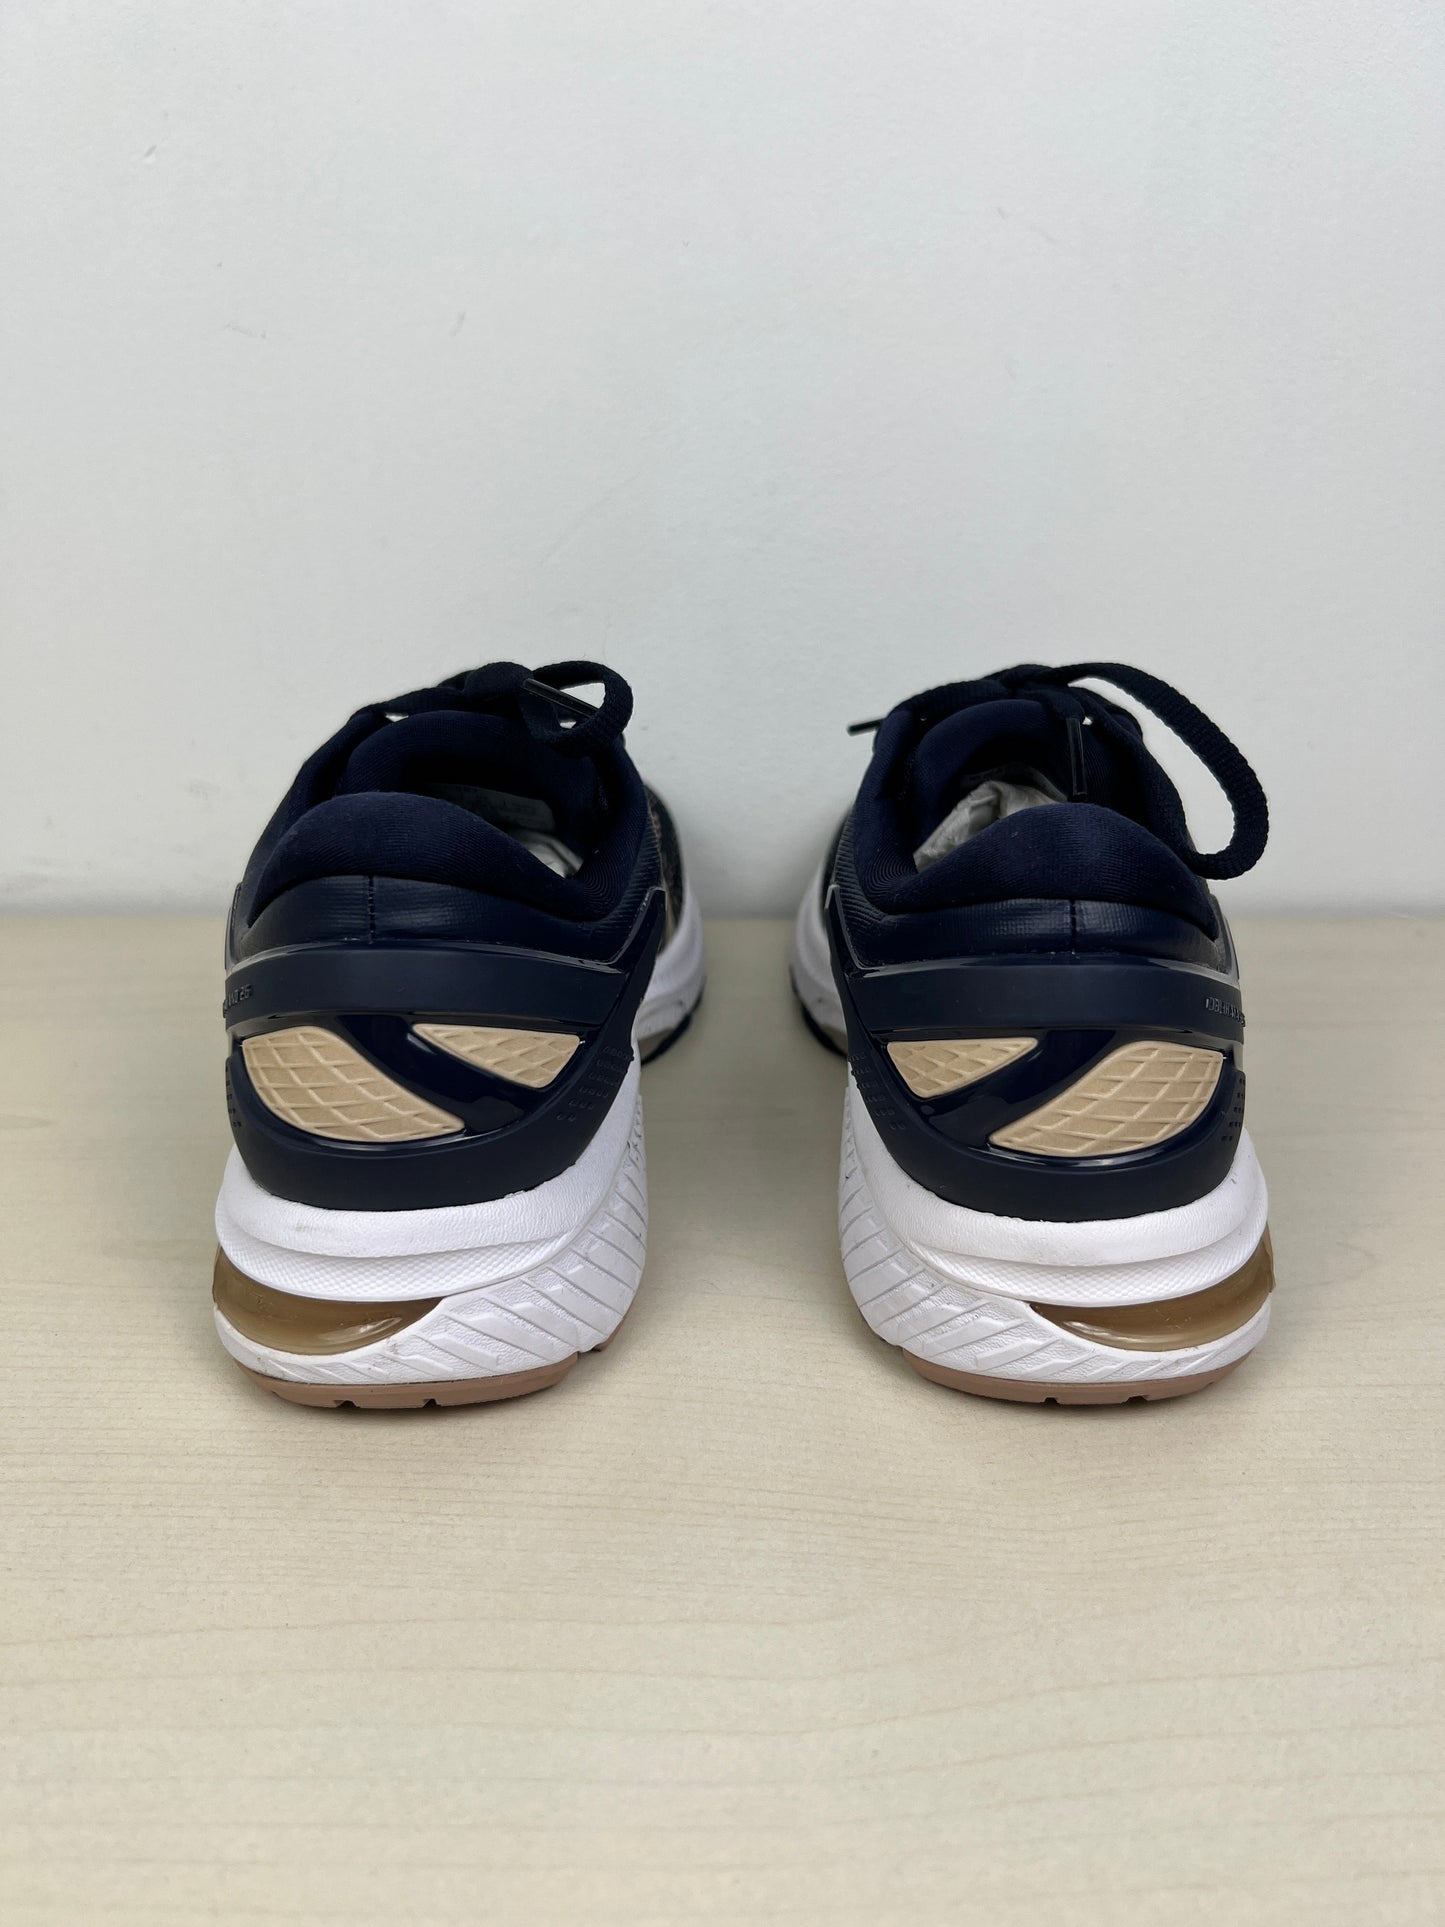 Navy Shoes Athletic Asics, Size 6.5